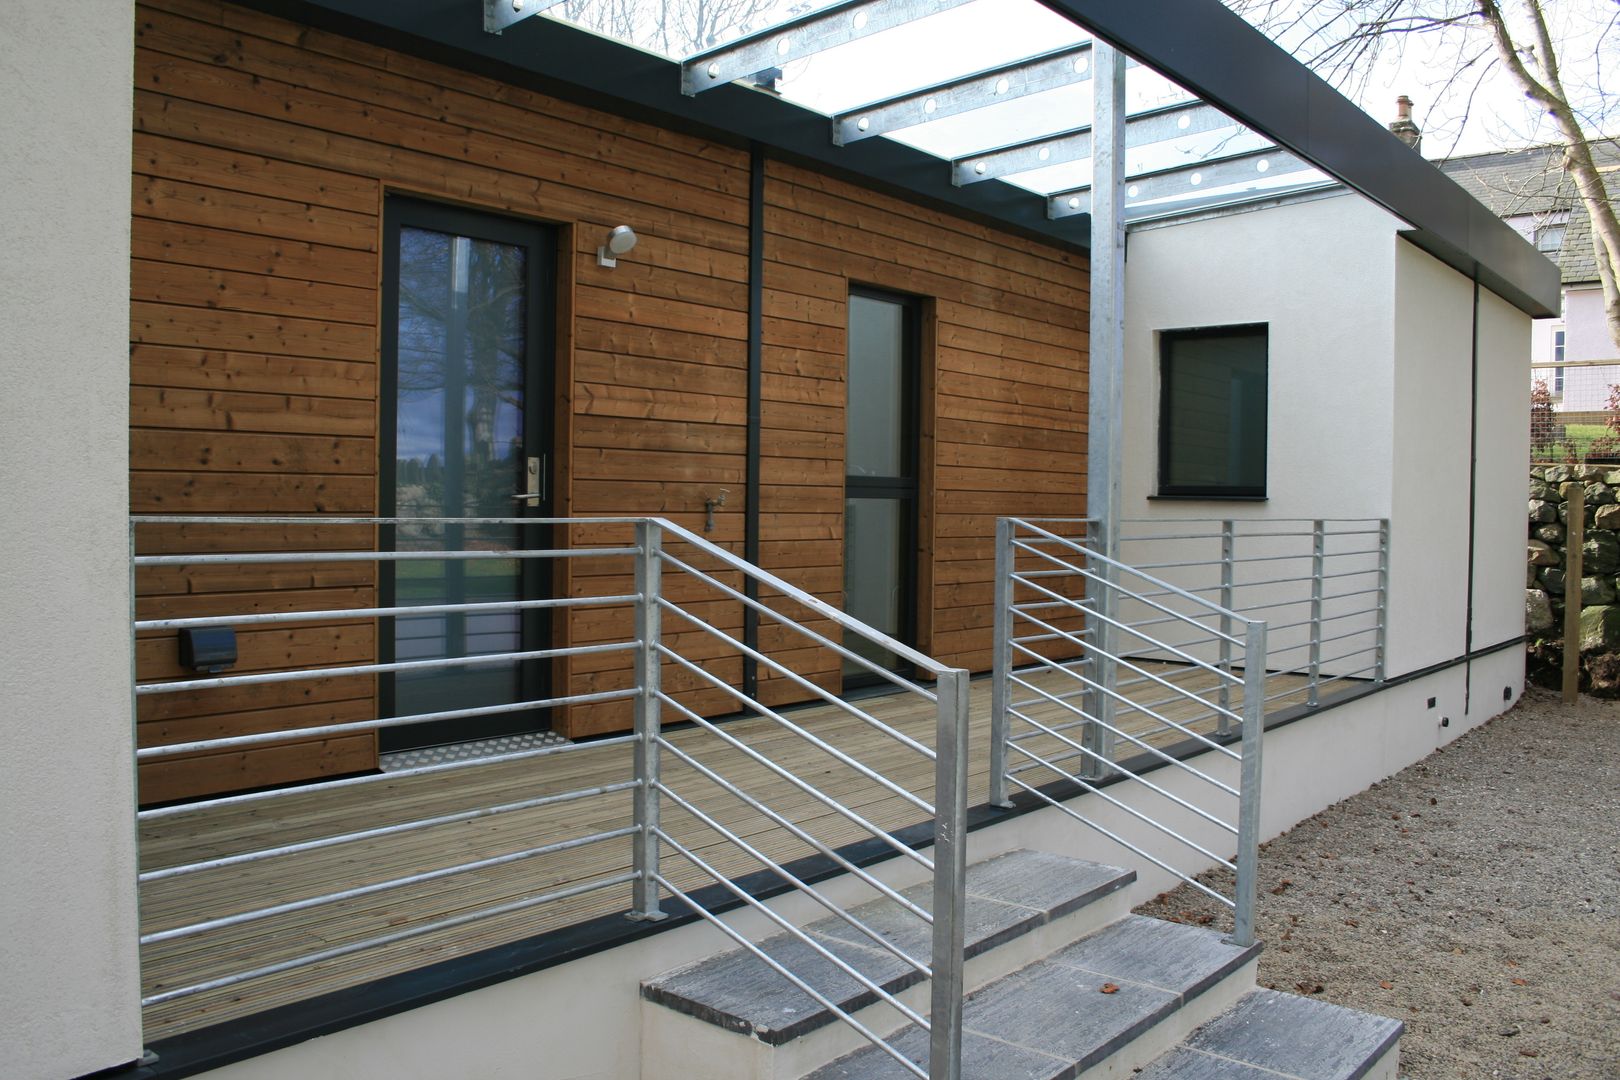 Schoolmasters rear deck build different Modern home